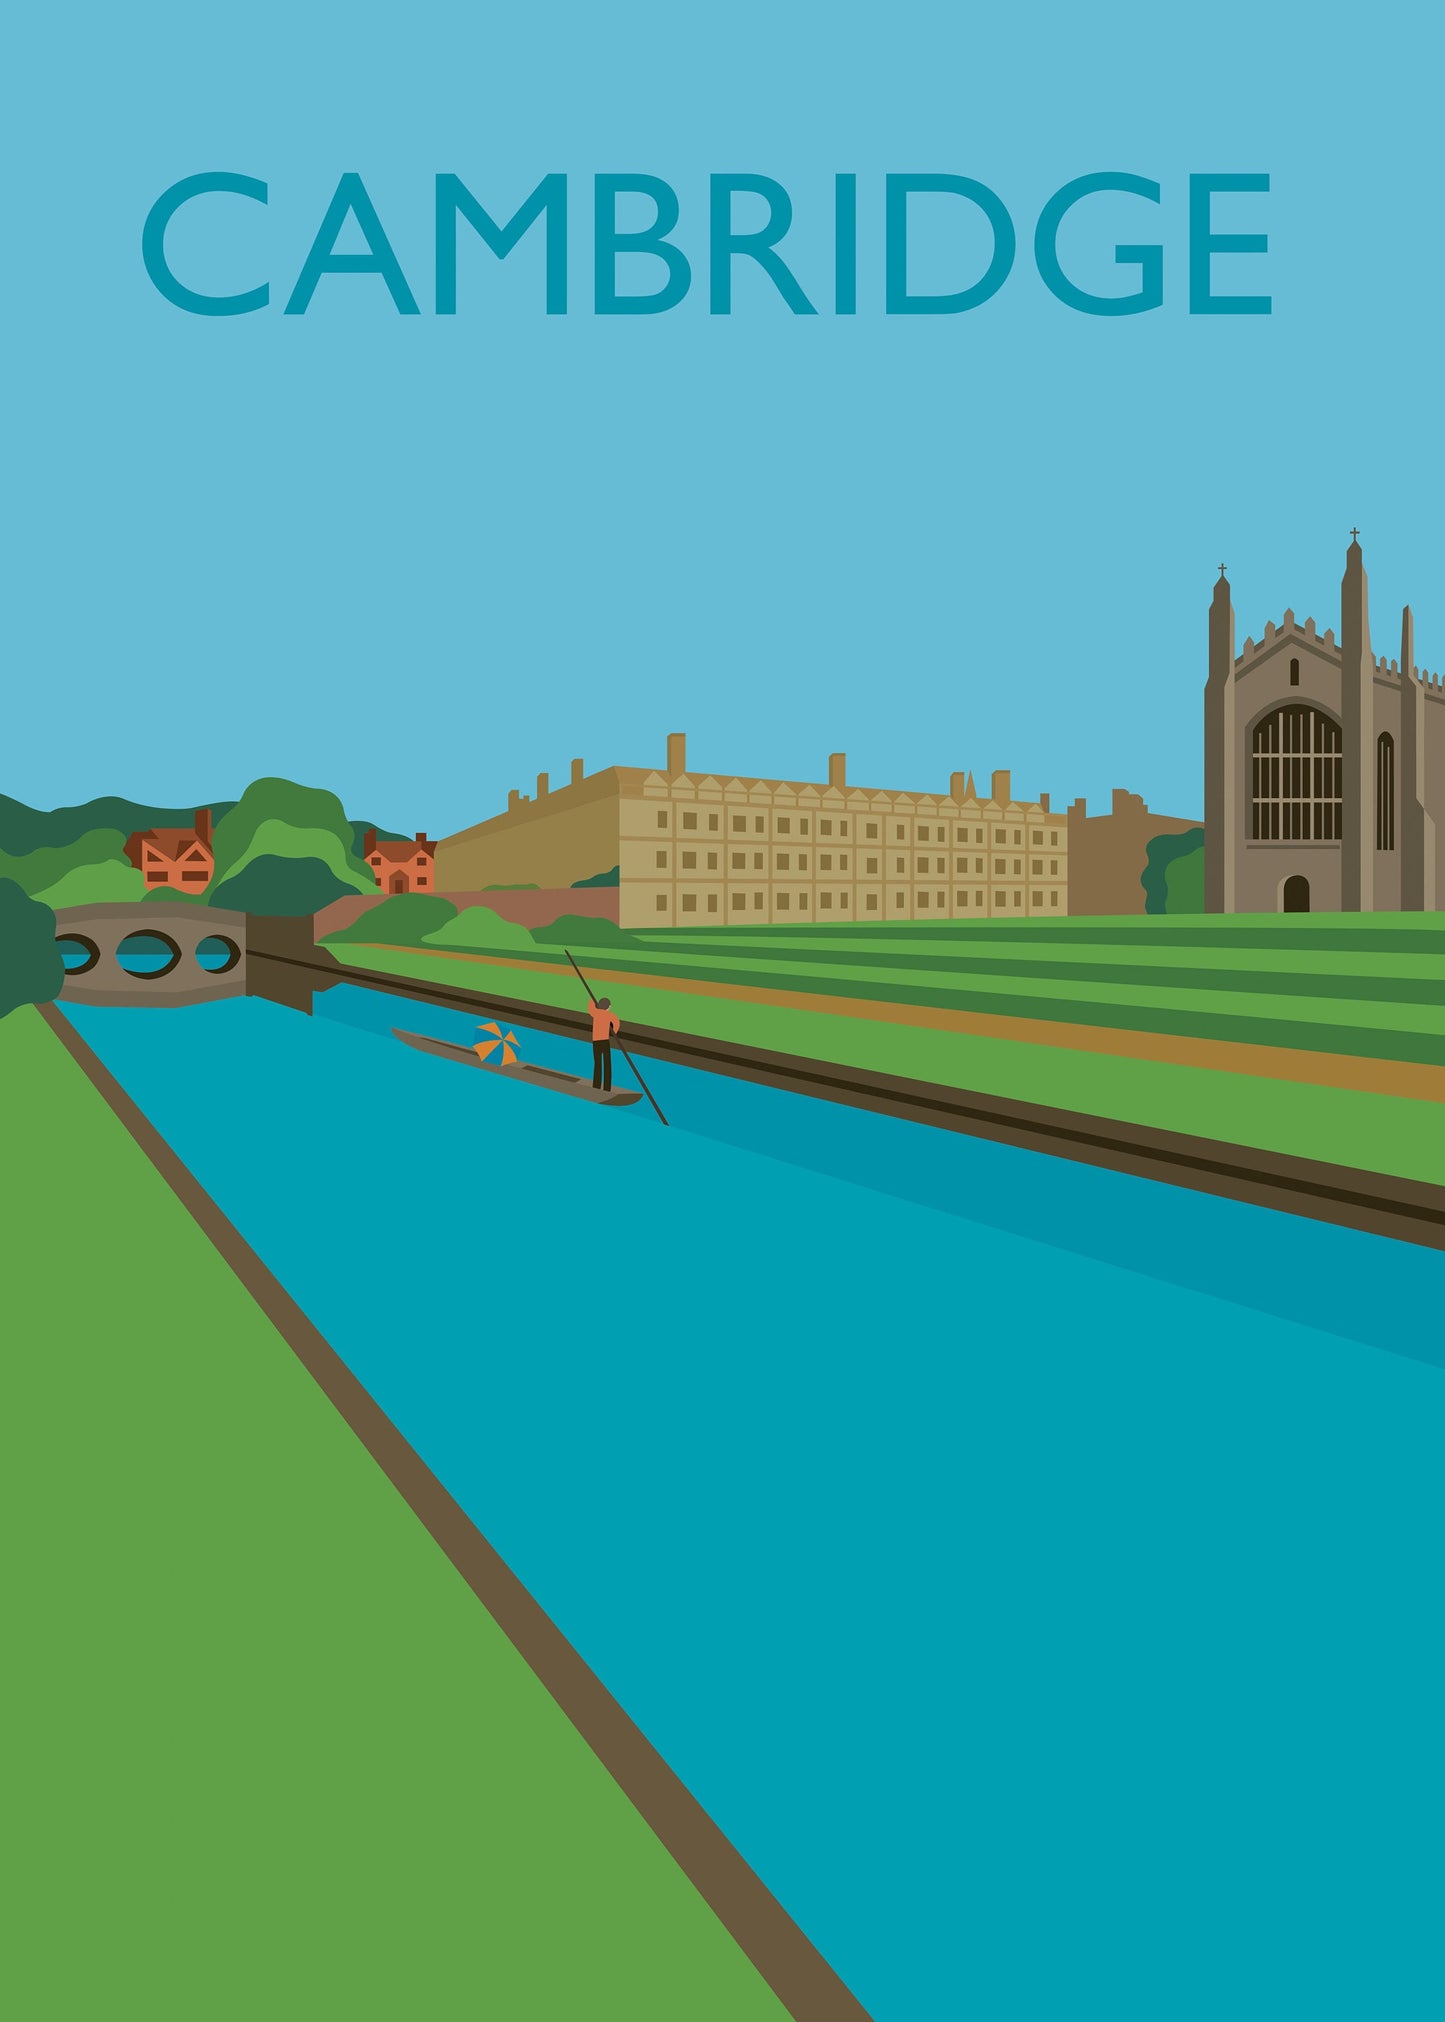 CAMBRIDGE Travel Poster - Cambridge University - Kings Chapel - Illustration by Rebecca Pymar